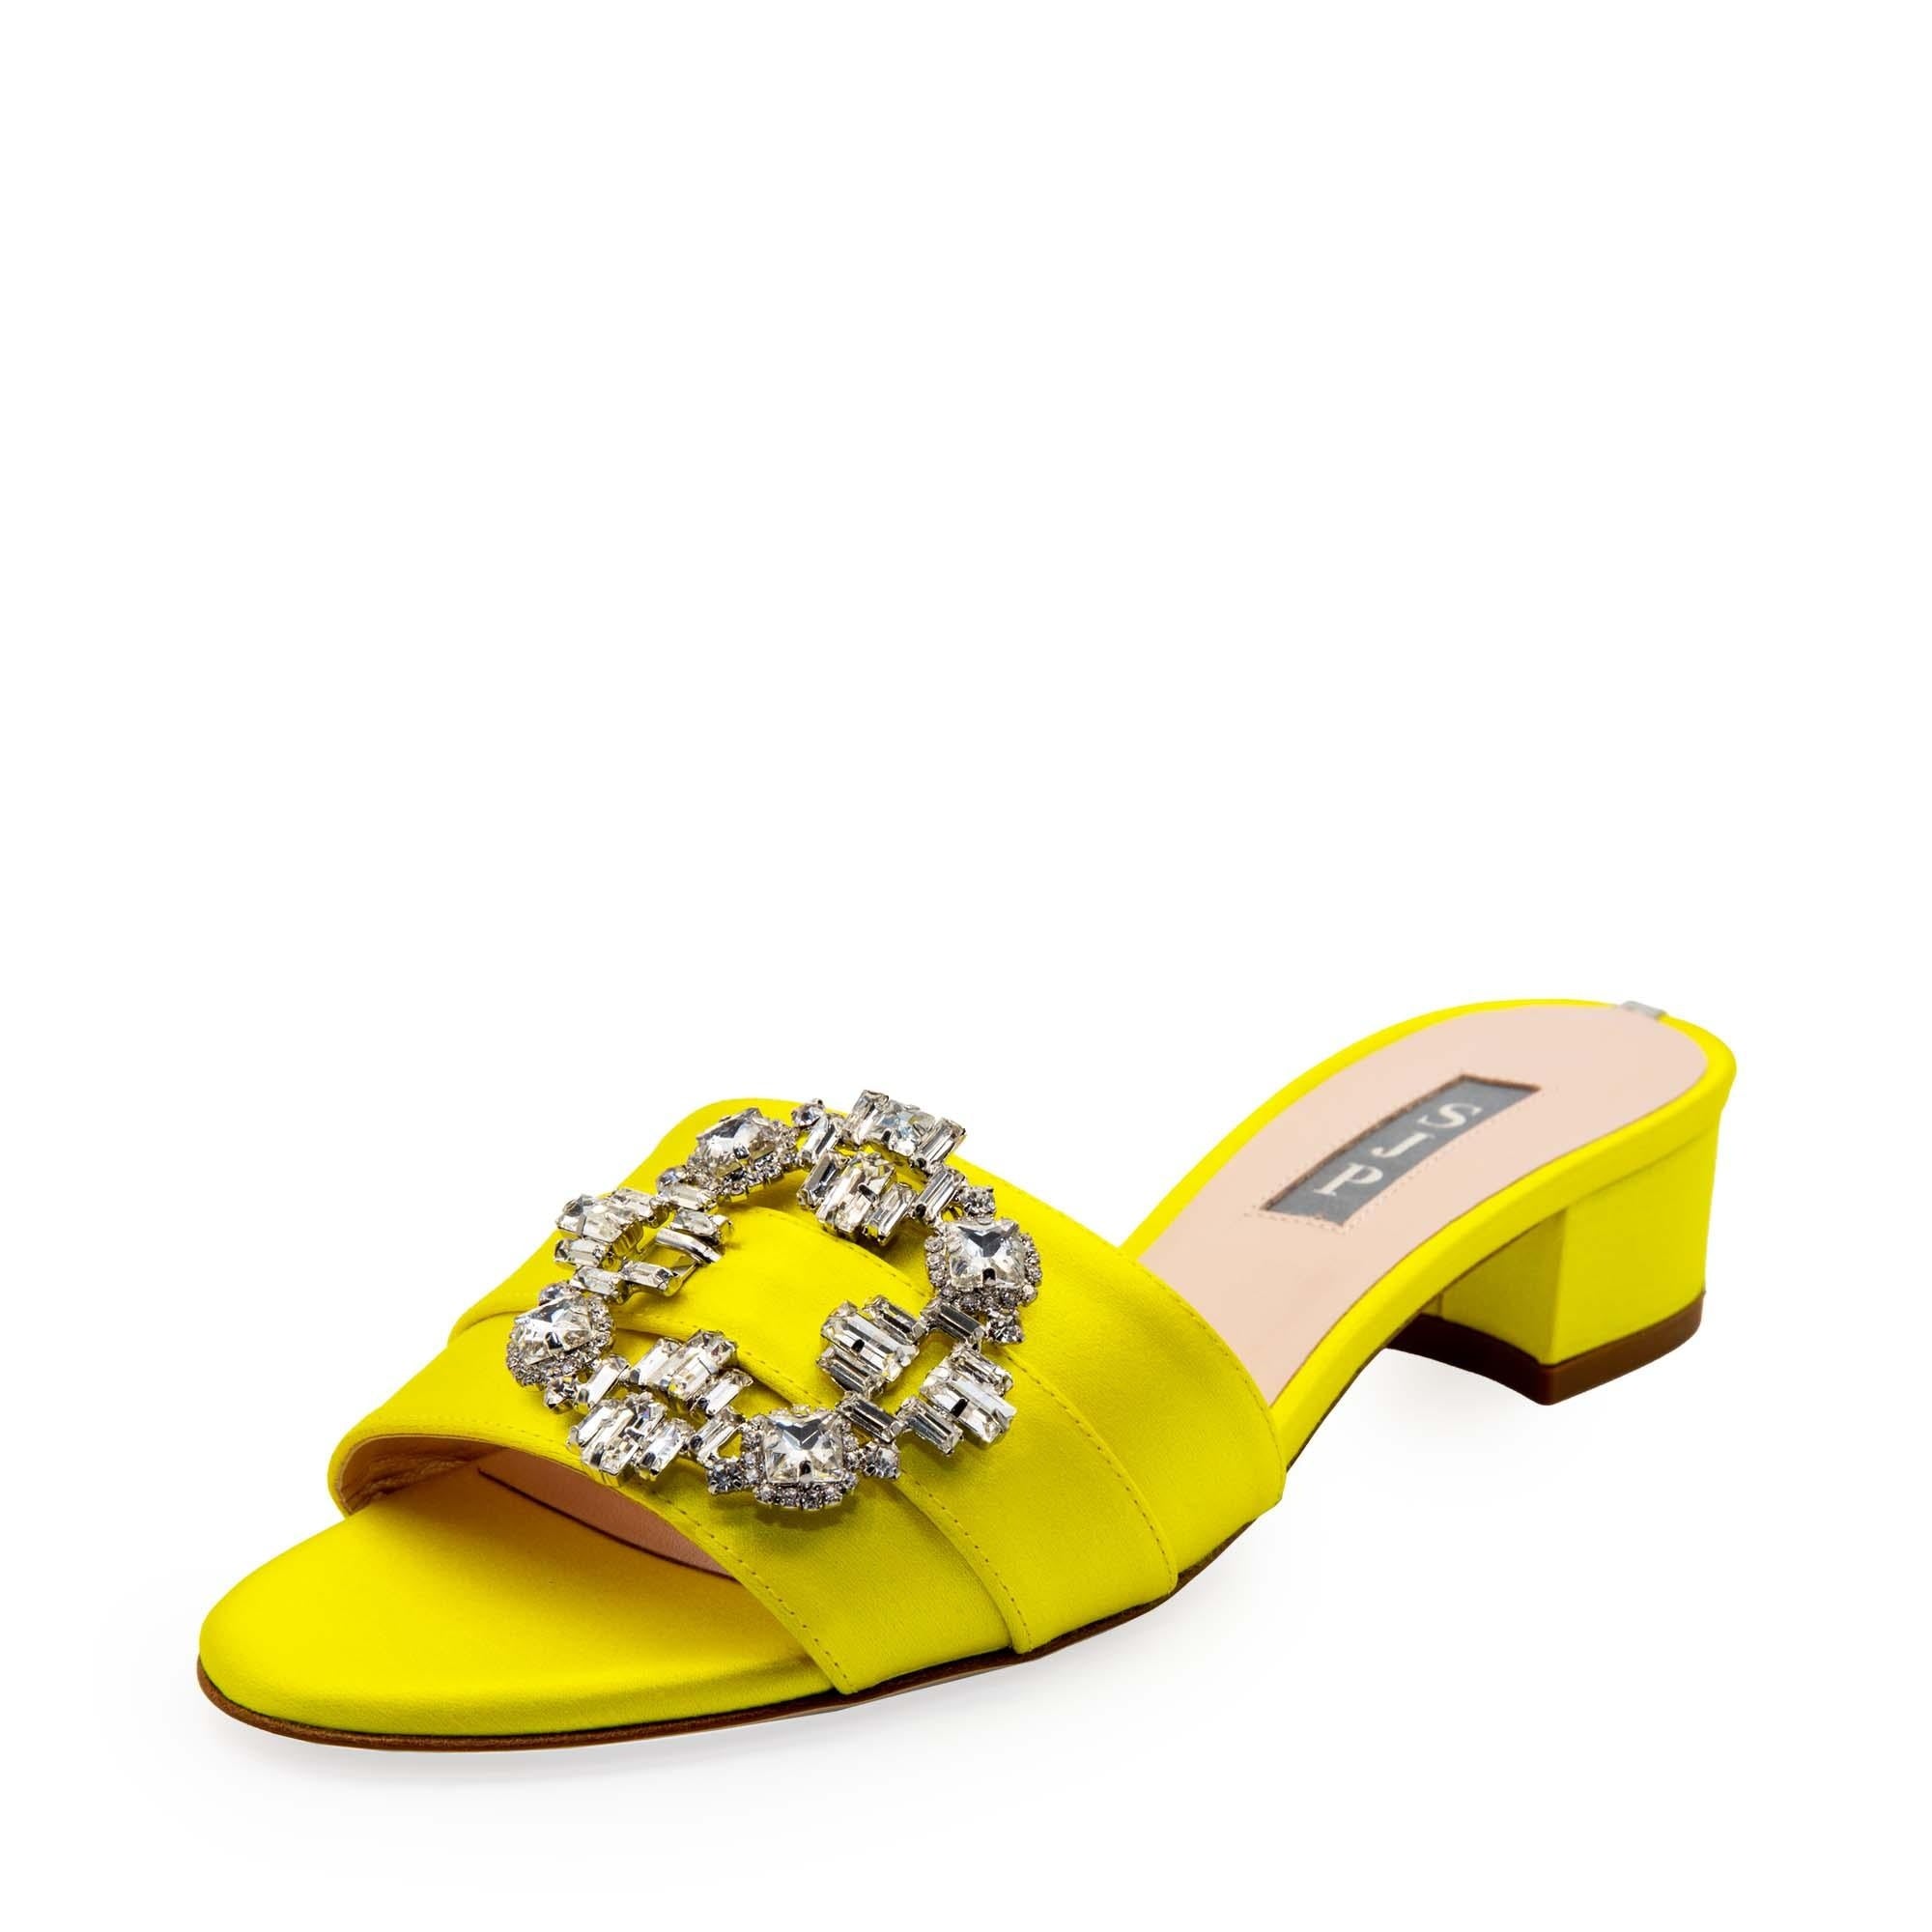 Tia Yellow Satin Sandals 30mm - InstaRunway.com